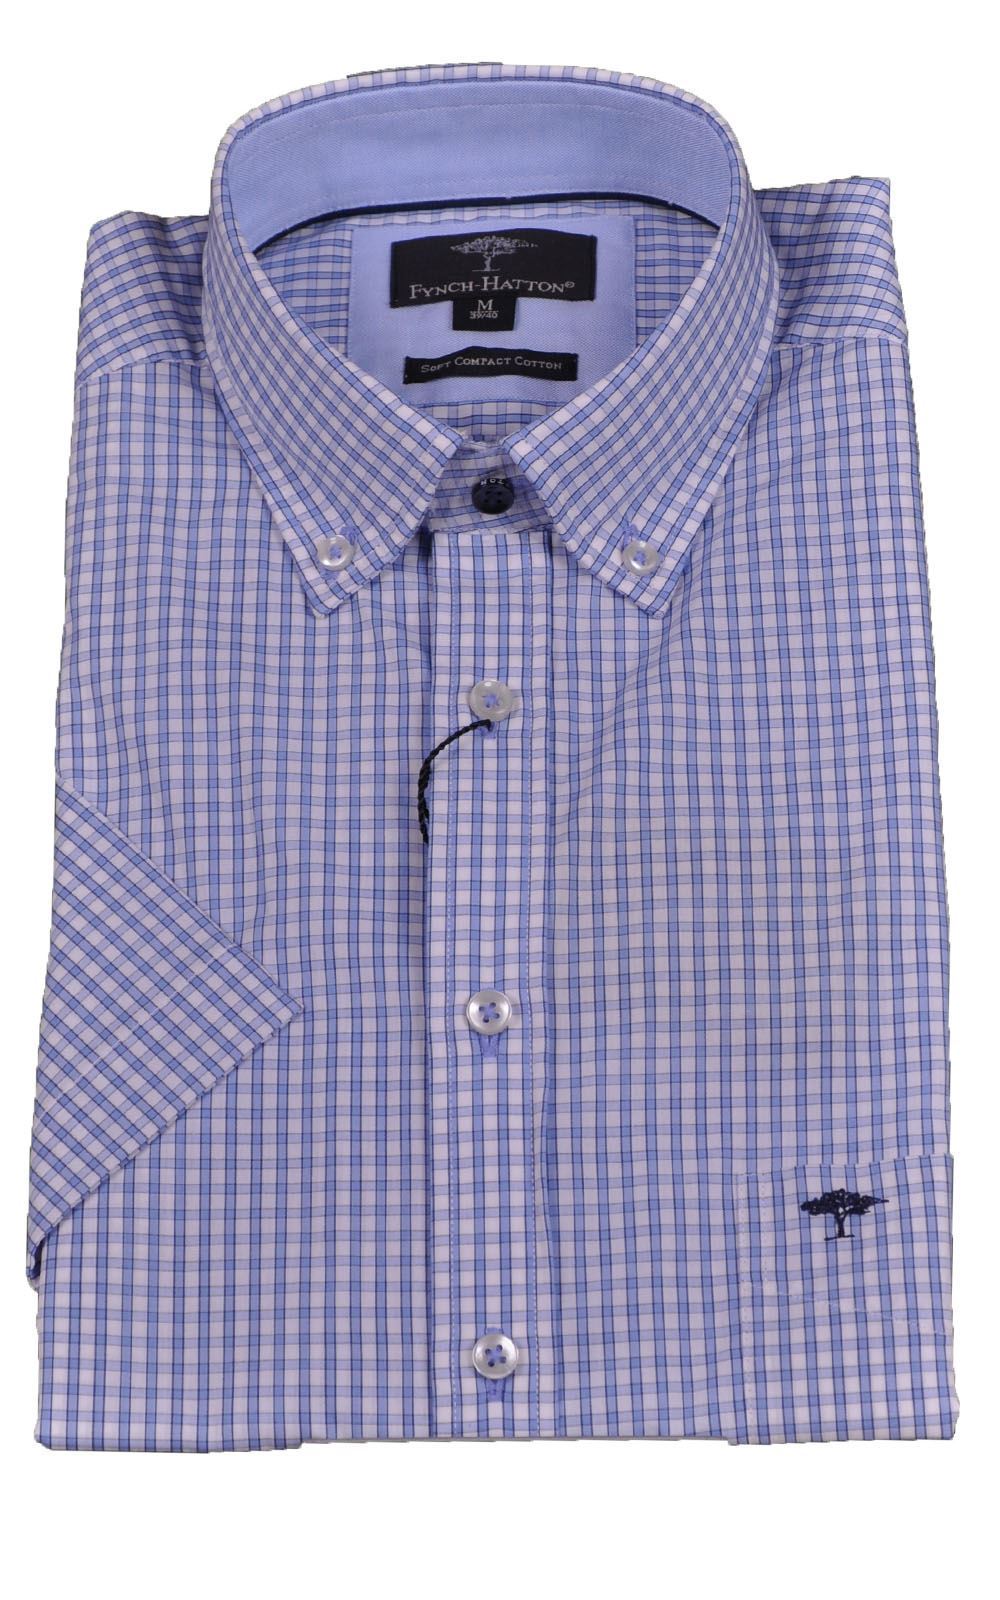 S&T Moore. Fynch Hatton Short Sleeve Shirt 1120-5021